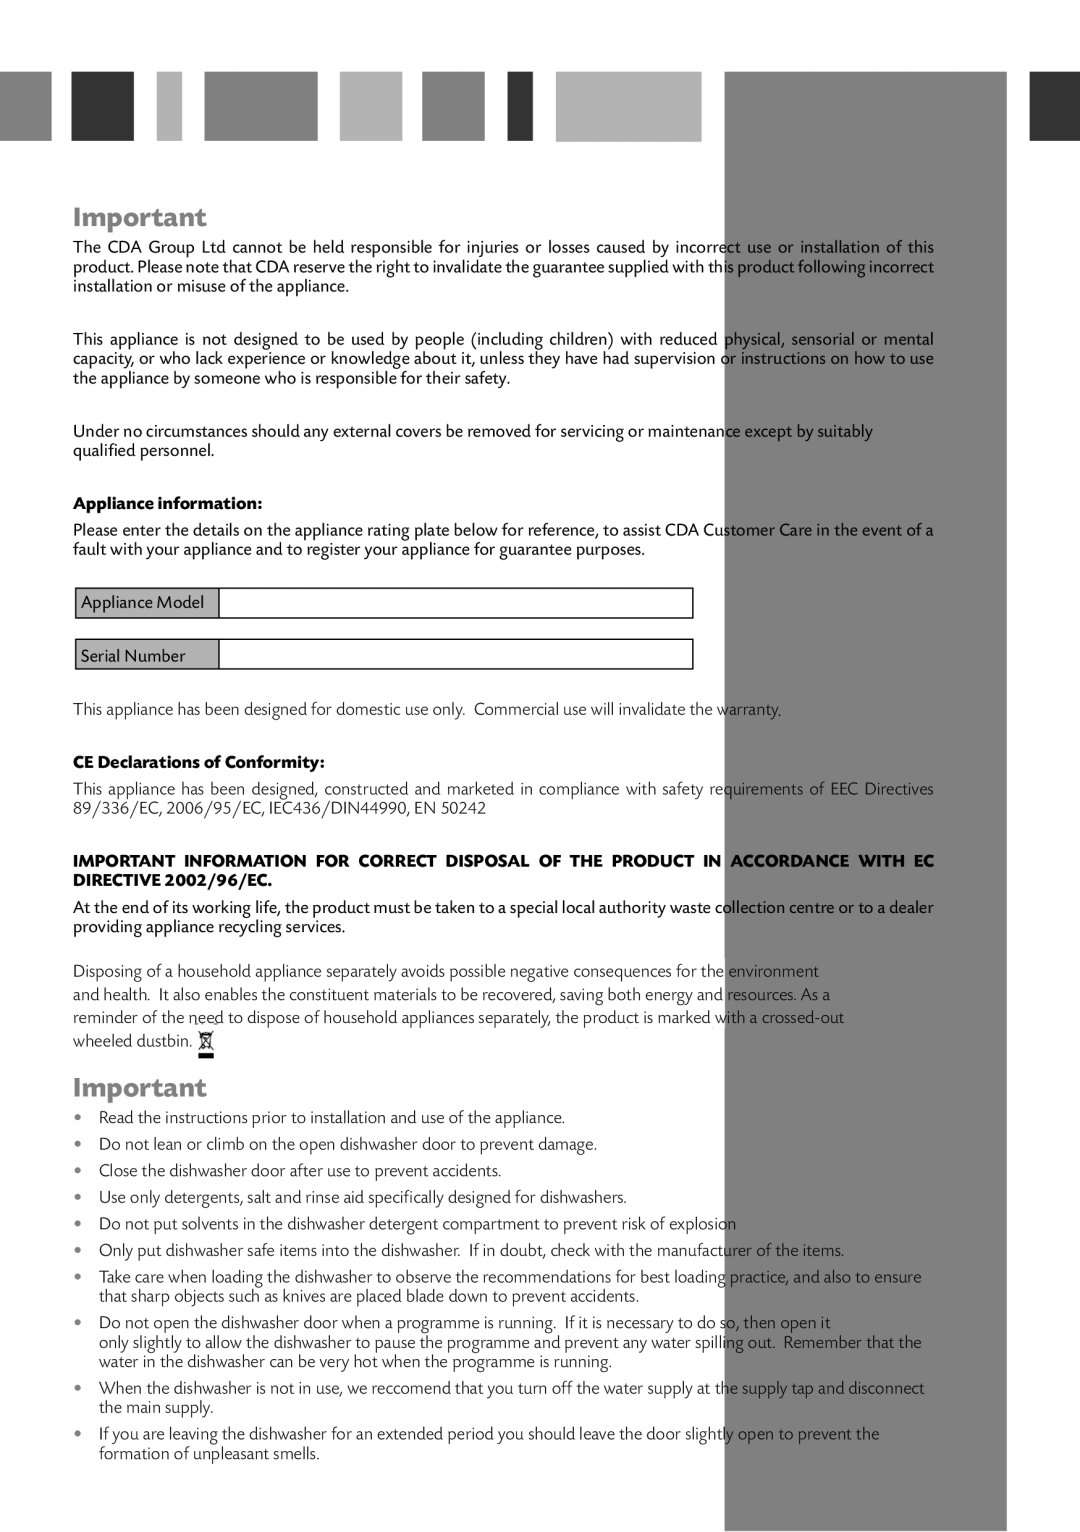 CDA WC140 manual Appliance information, CE Declarations of Conformity 